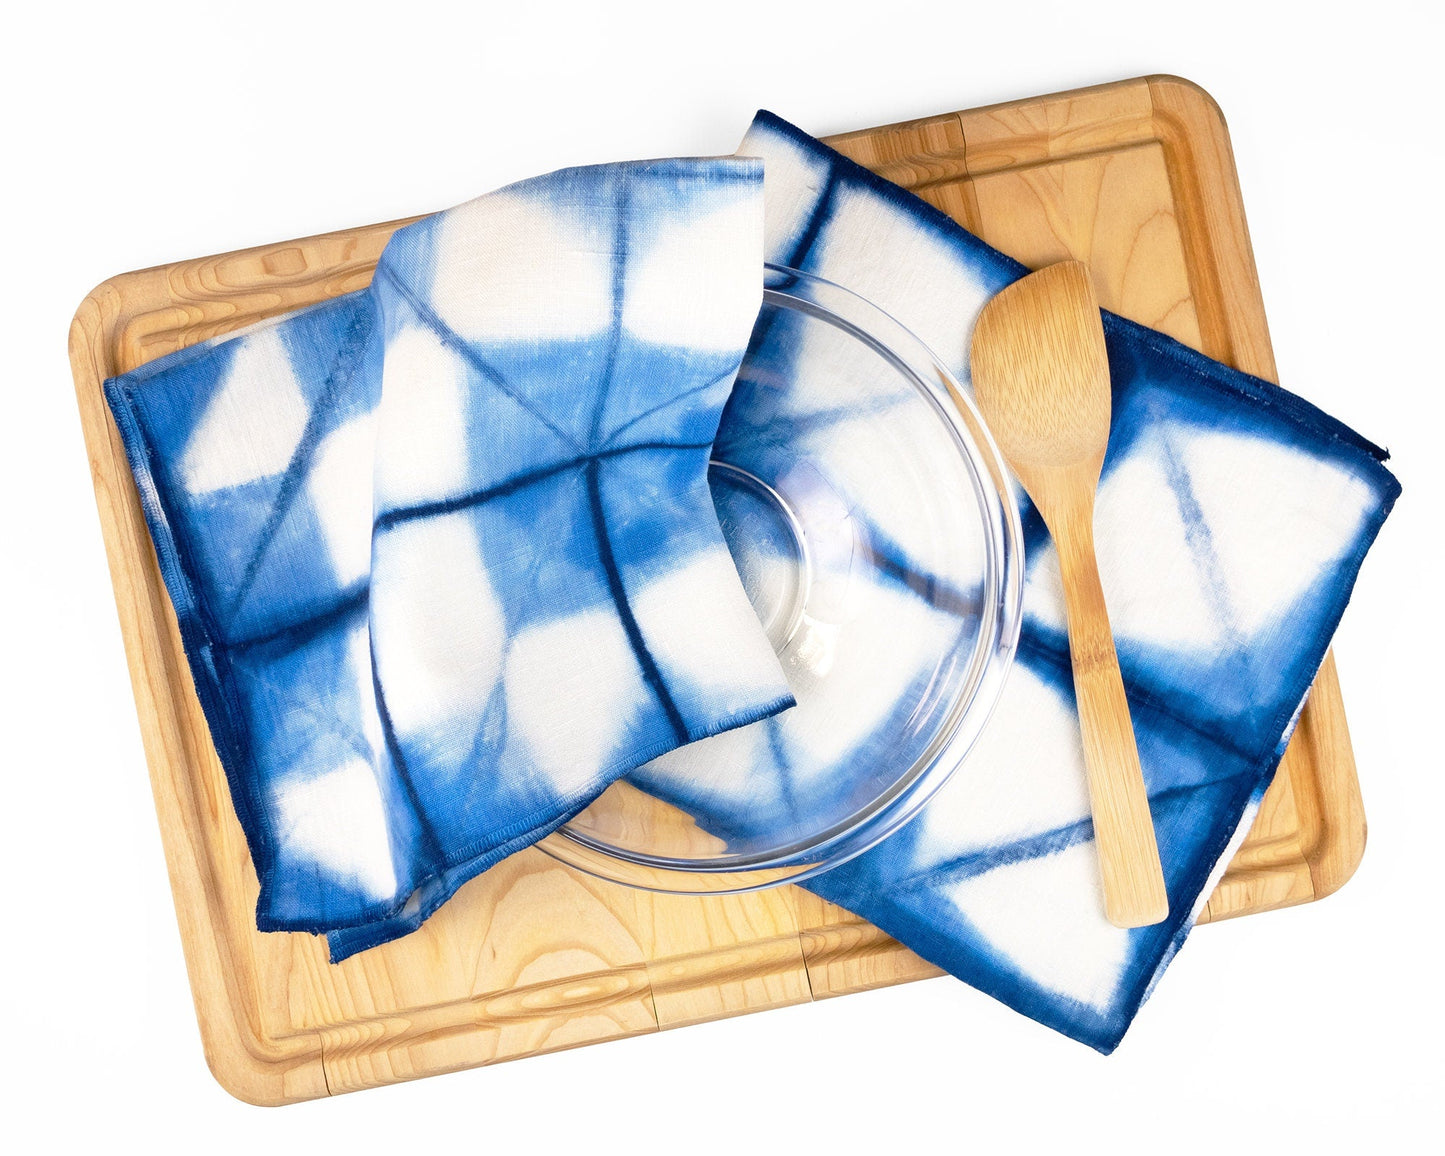 Shibori-Dyed Linen Tea Towels, Set of 2 - Sherri O Designs